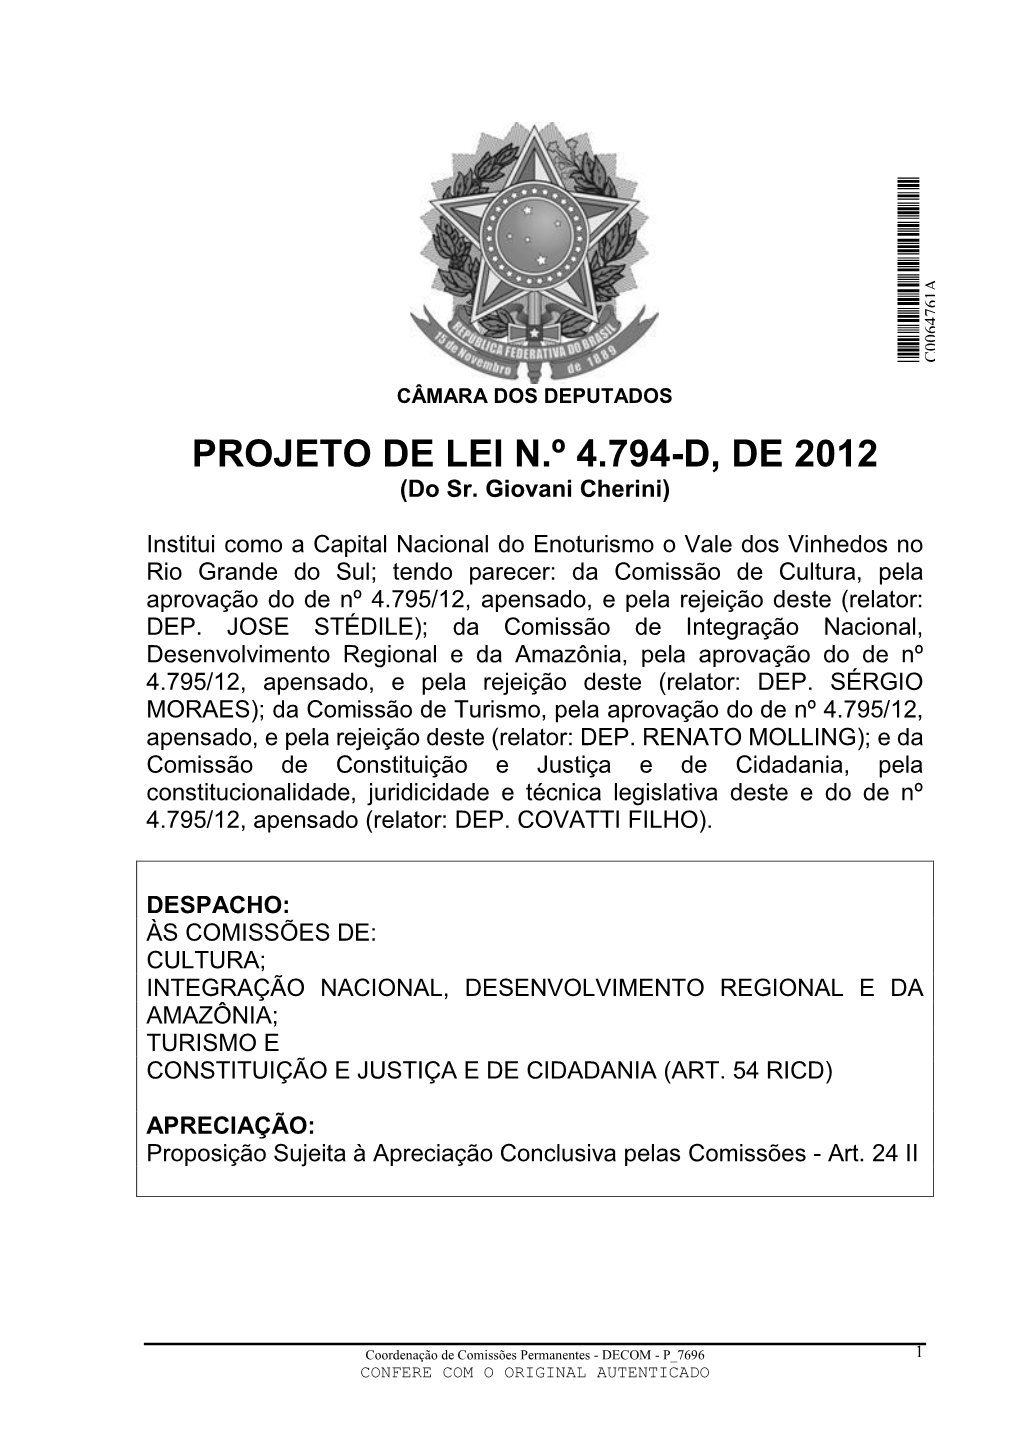 PROJETO DE LEI N.º 4.794-D, DE 2012 (Do Sr